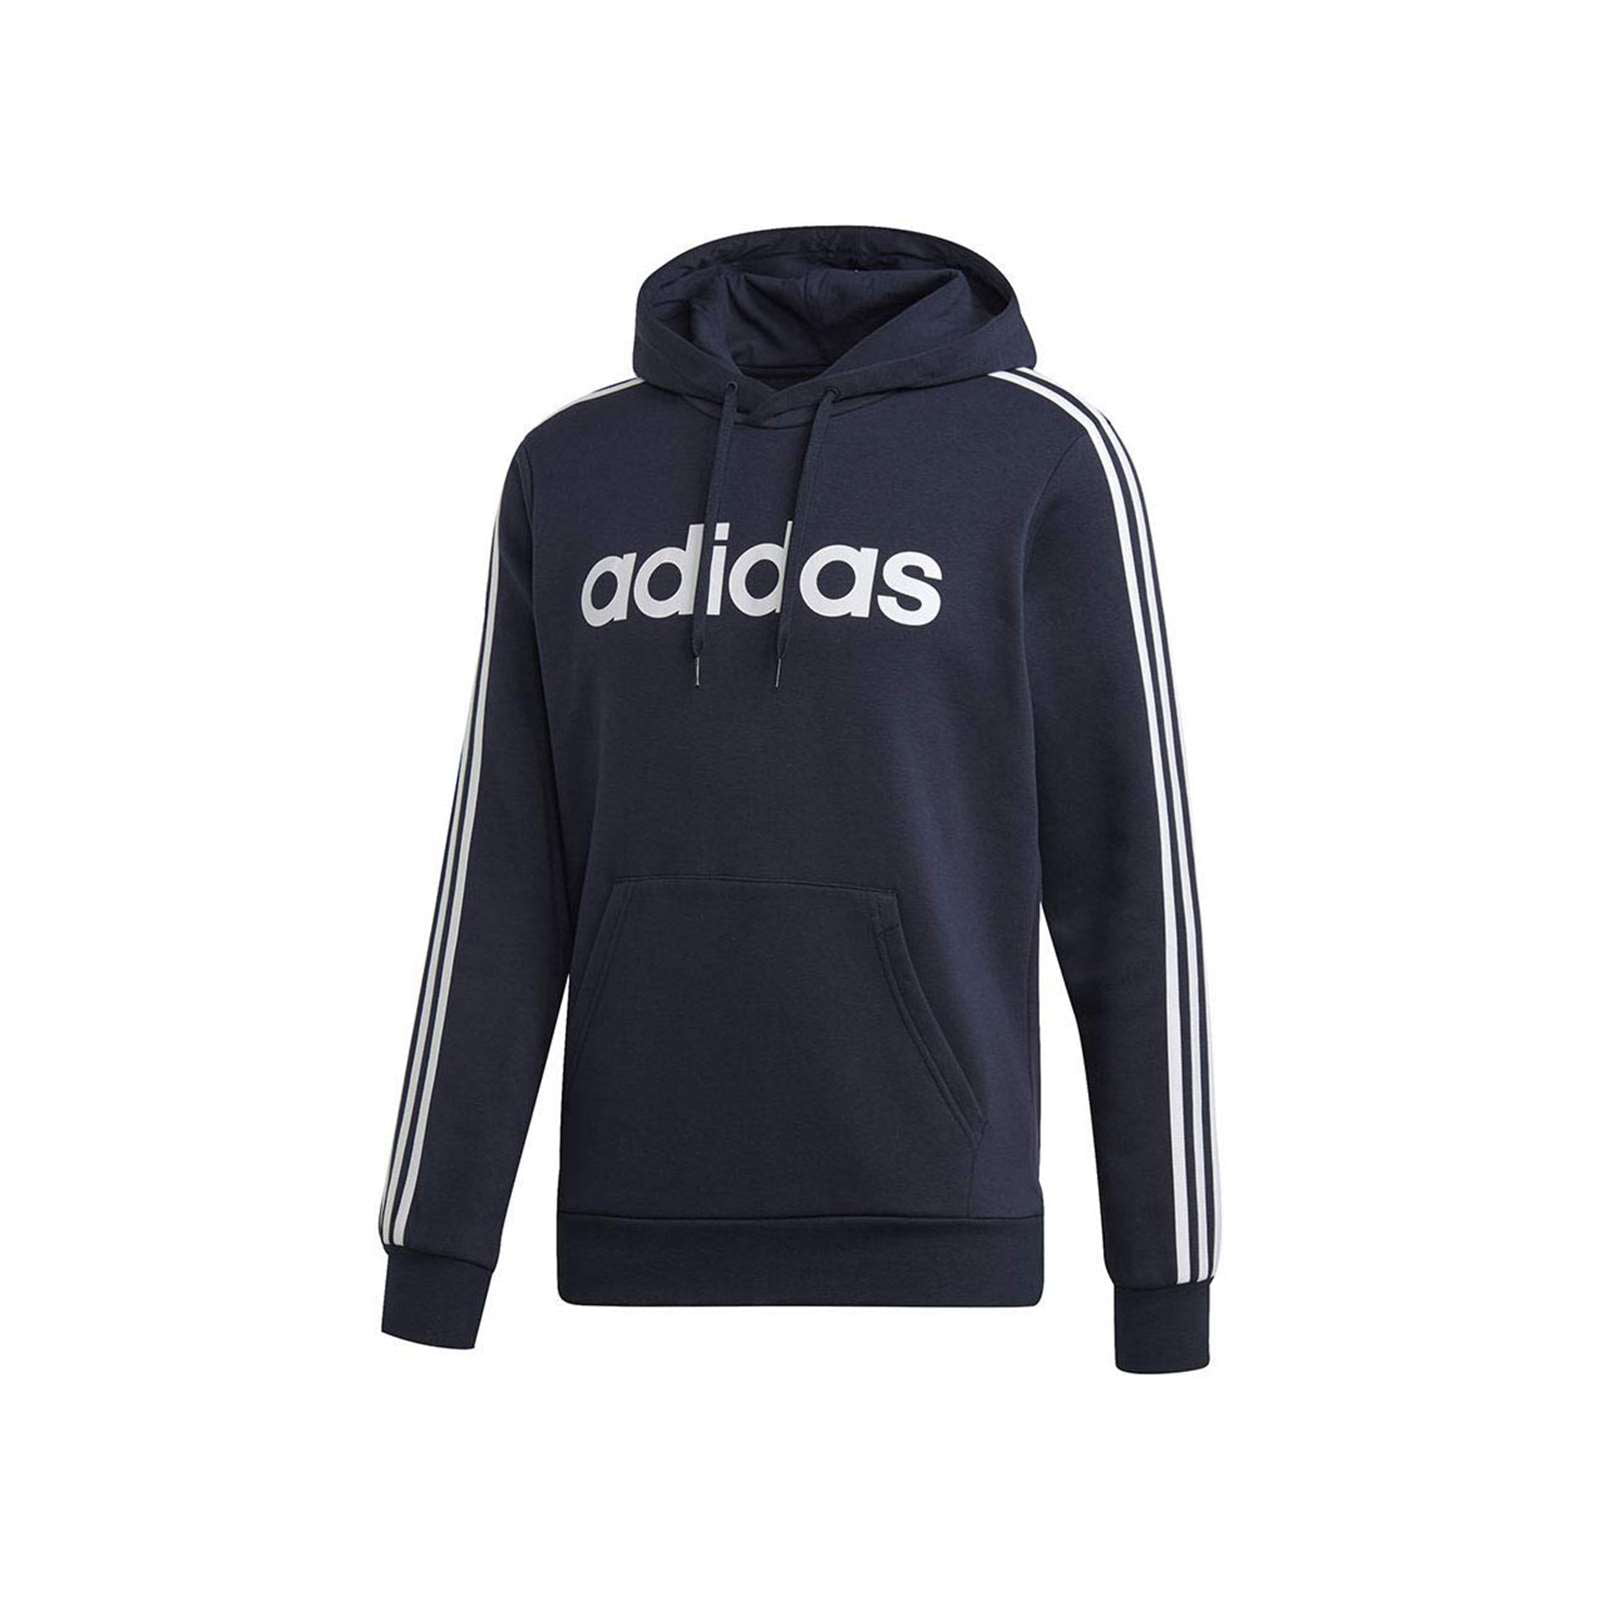 adidas 3 stripe pullover hoodie